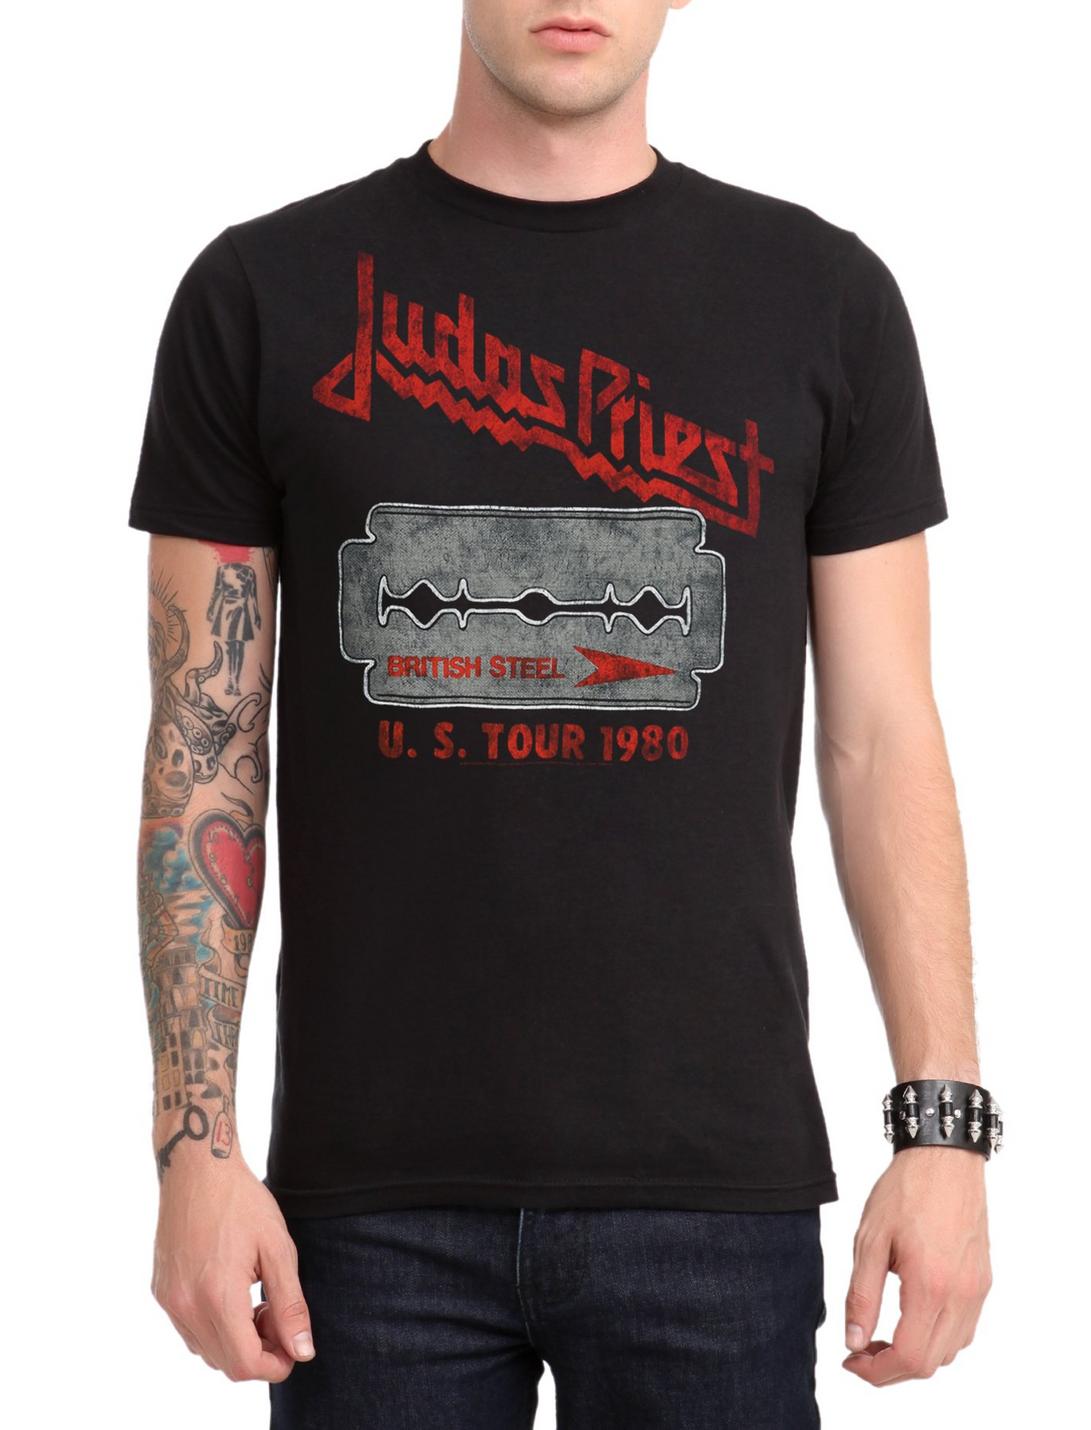 Judas Priest British Steel Tour T-Shirt, BLACK, hi-res